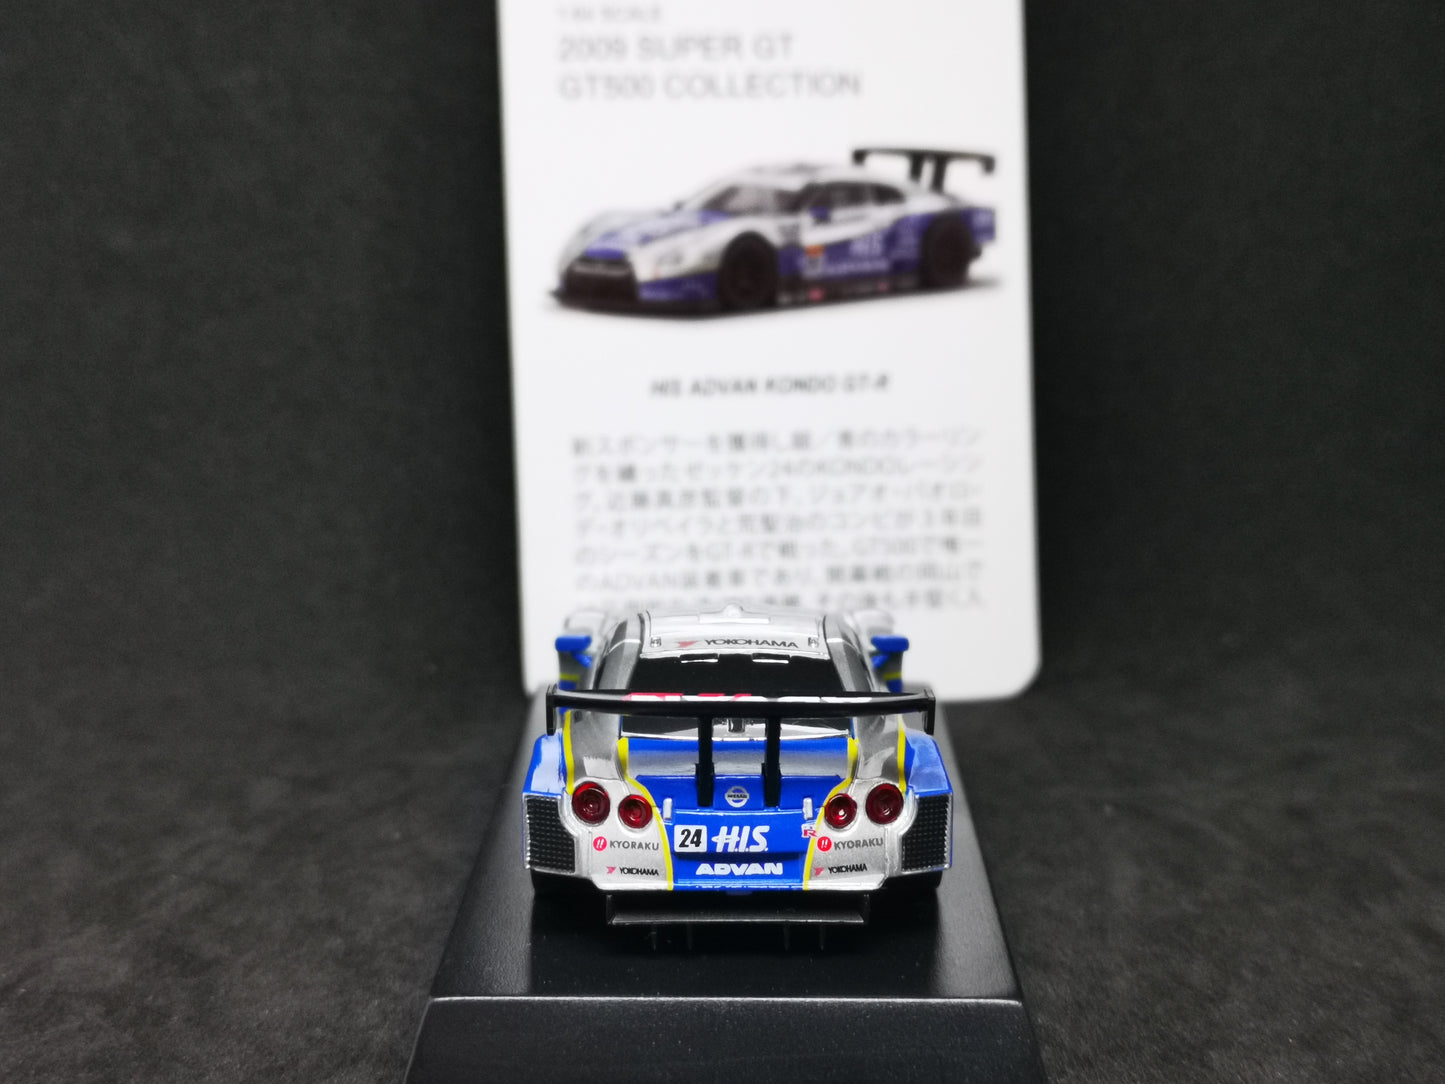 Kyosho 1:64 Scale 2009 Super GT500 collection HIS Advan Kondo Nissan GT-R